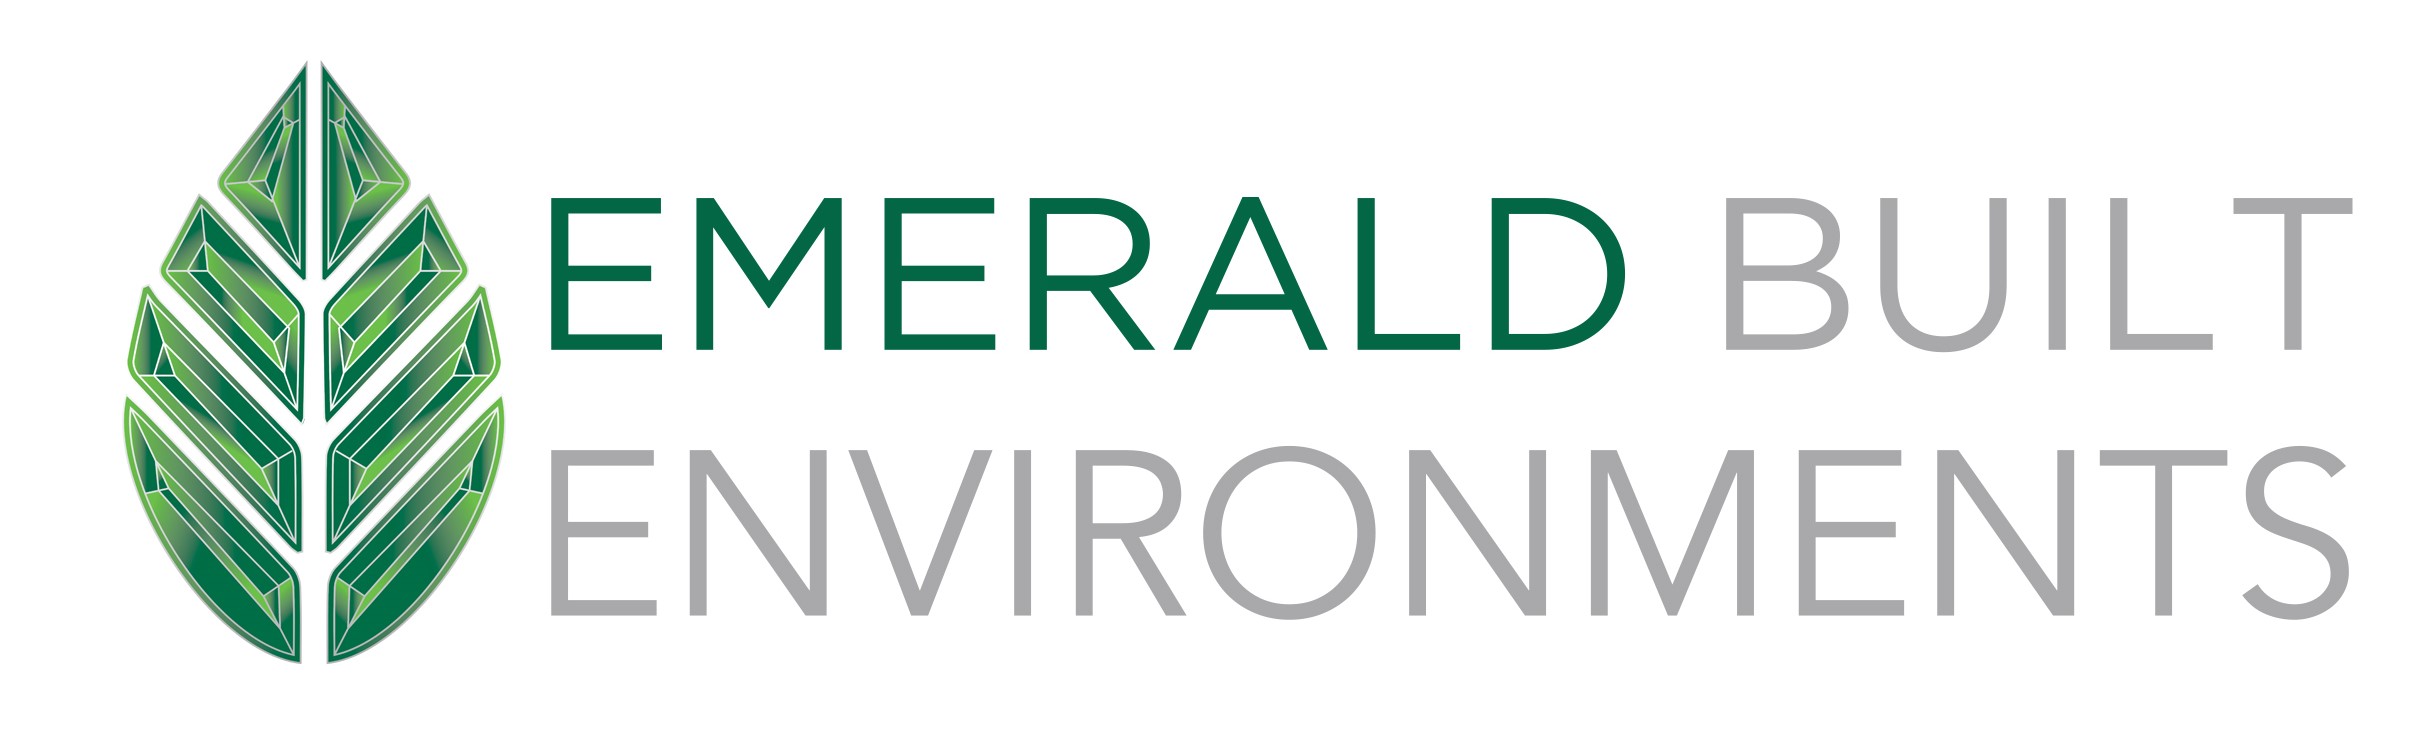 Emerald Built Environments Logo